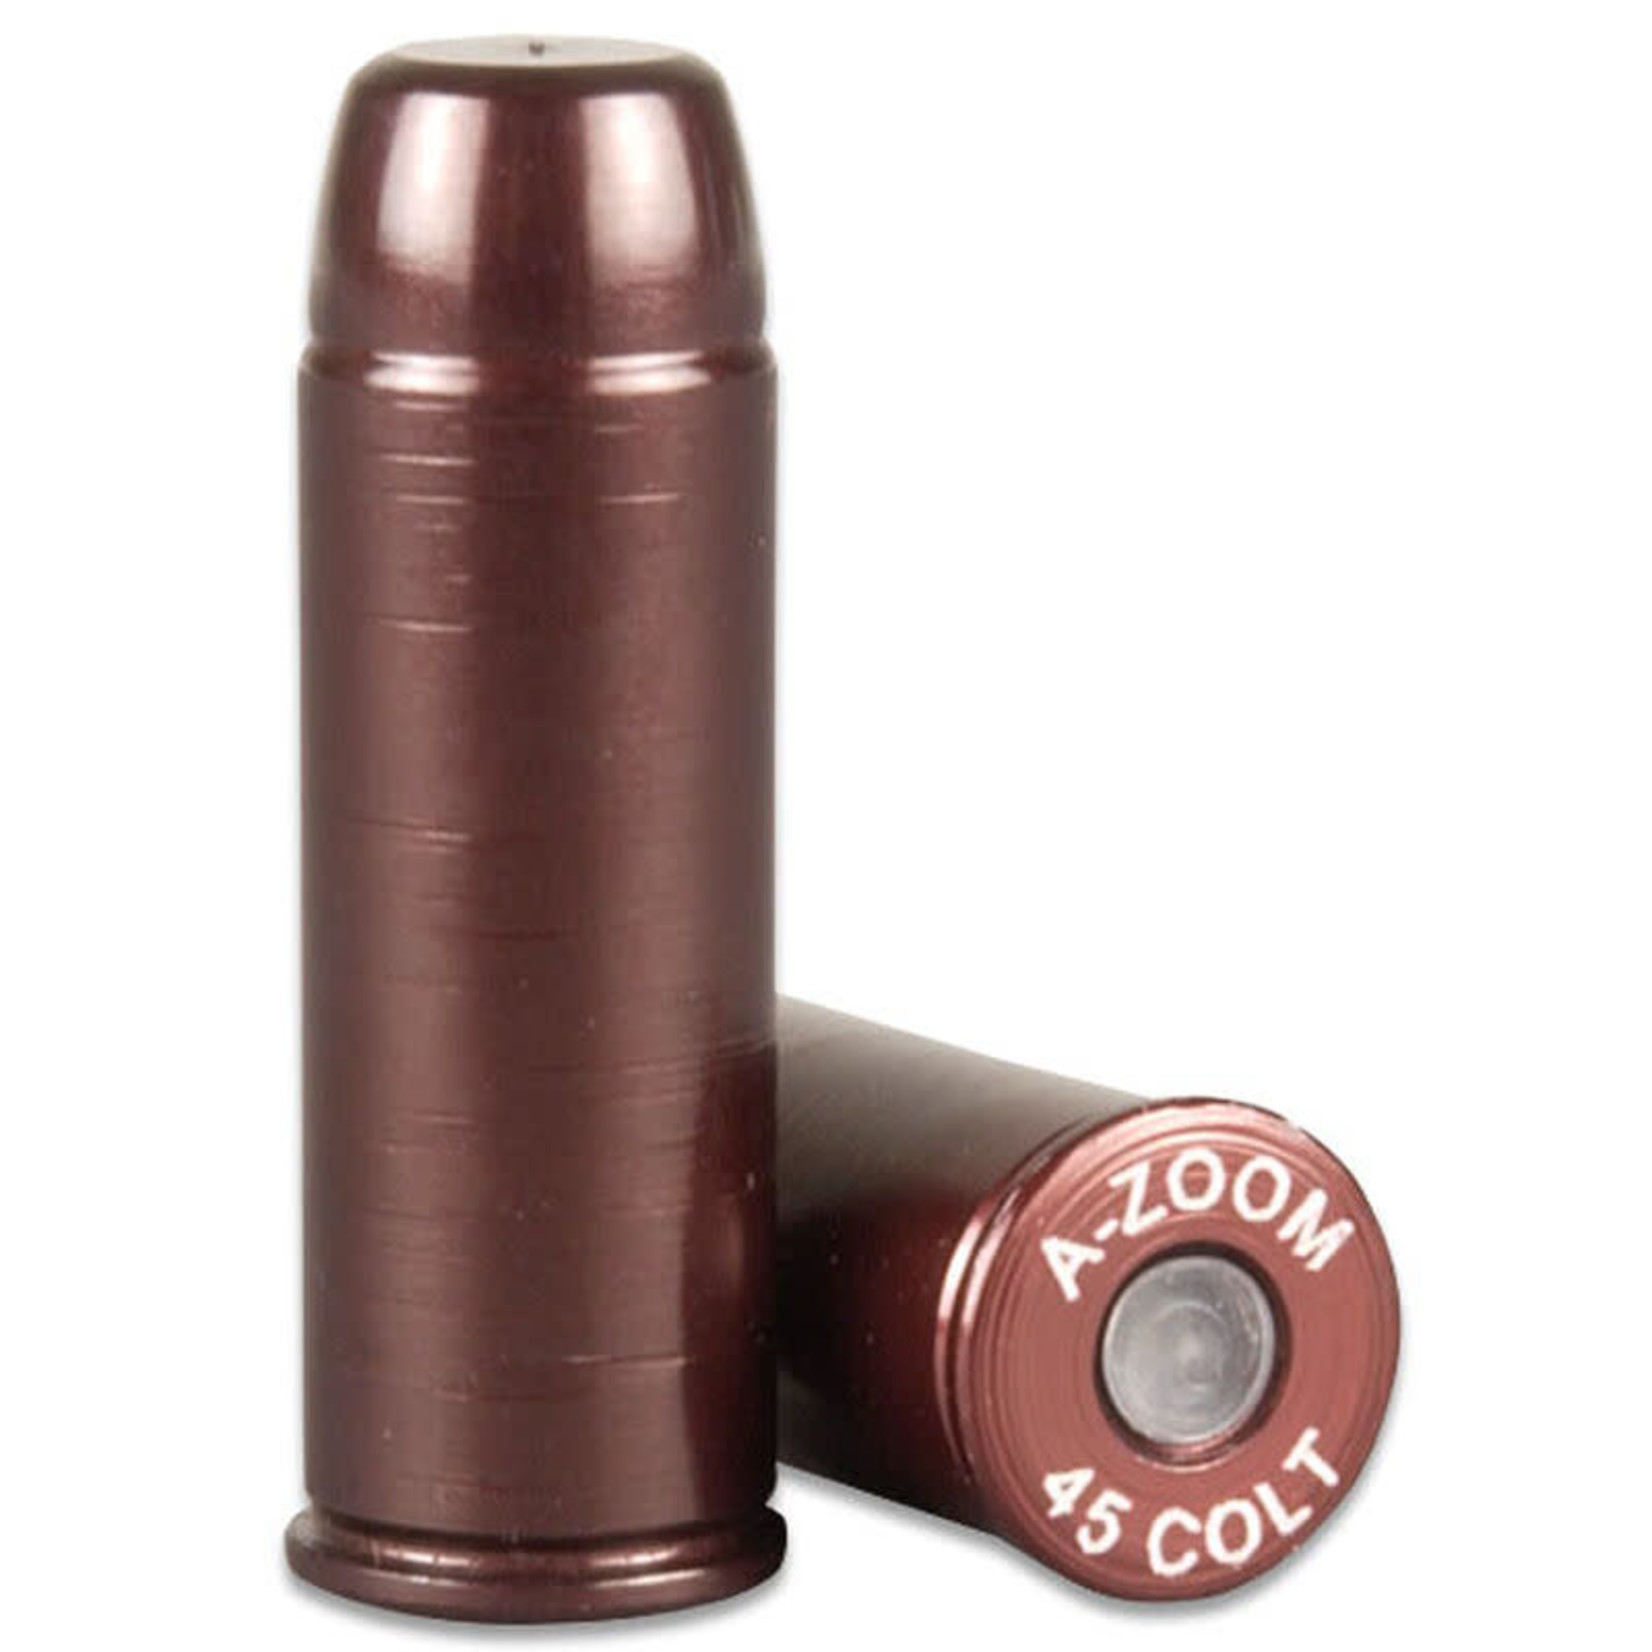 AZOOM A-Zoom Snap Caps .45 Colt Six Pack